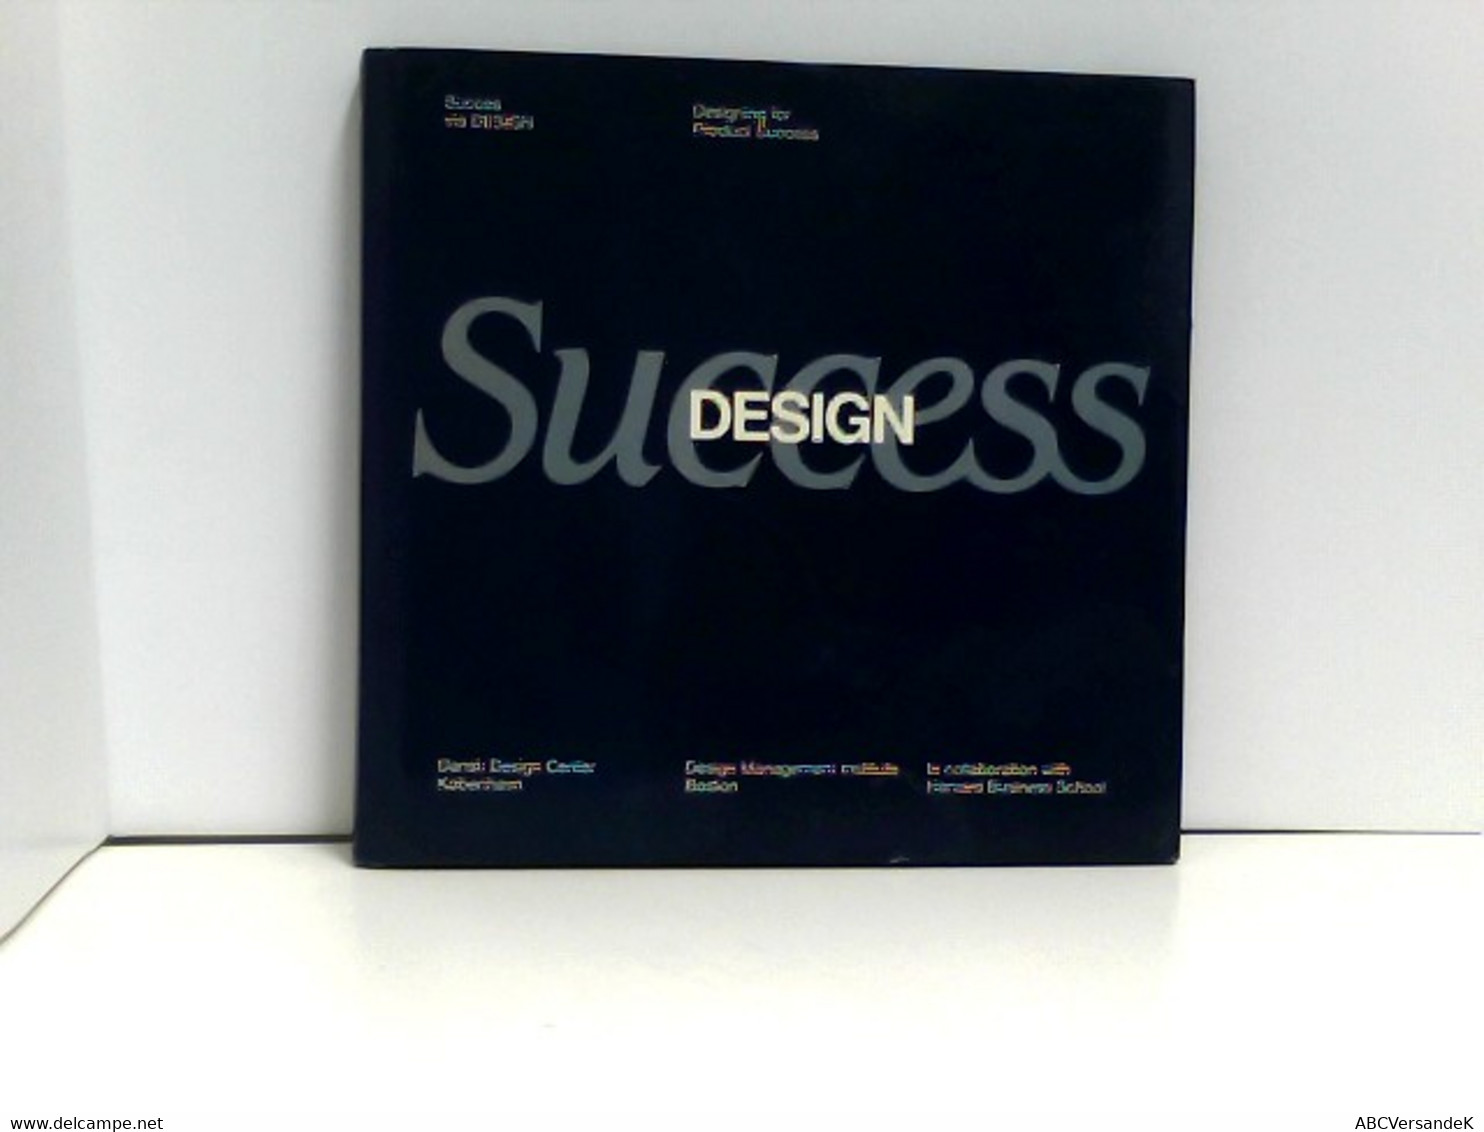 Design Via Success - Graphism & Design